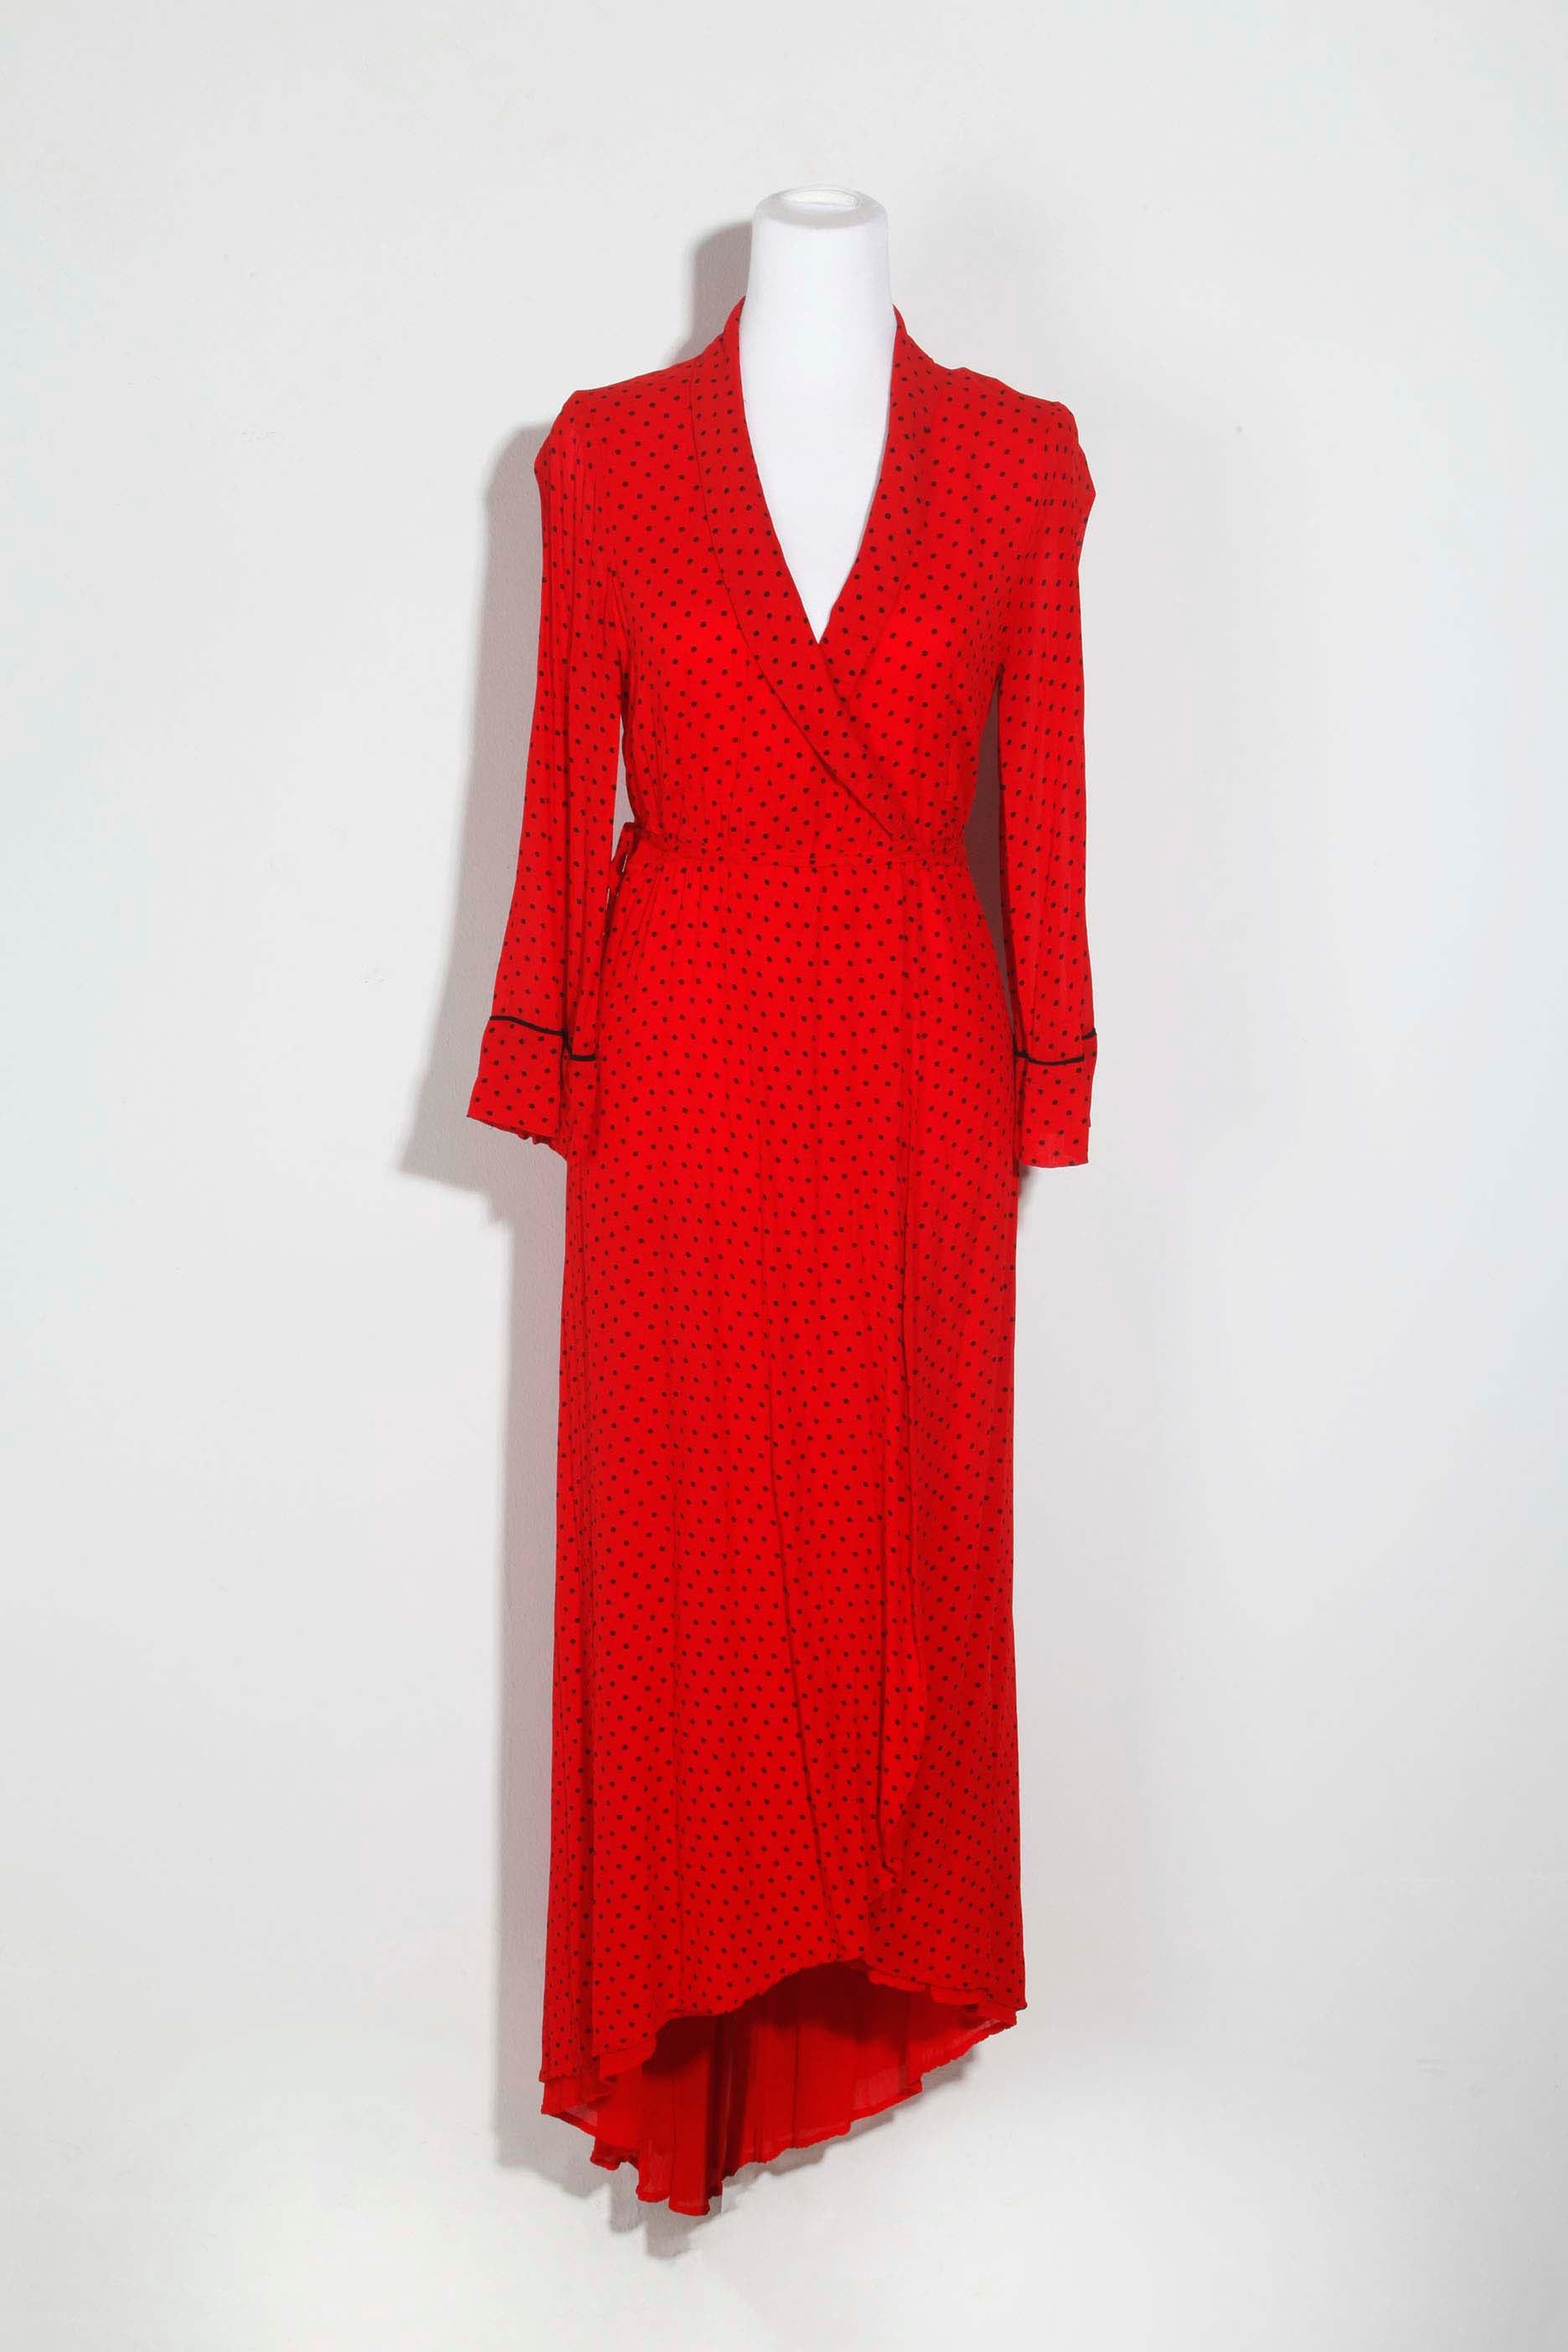 Ganni Red Polka Dot Wrap Dress (Eu38)